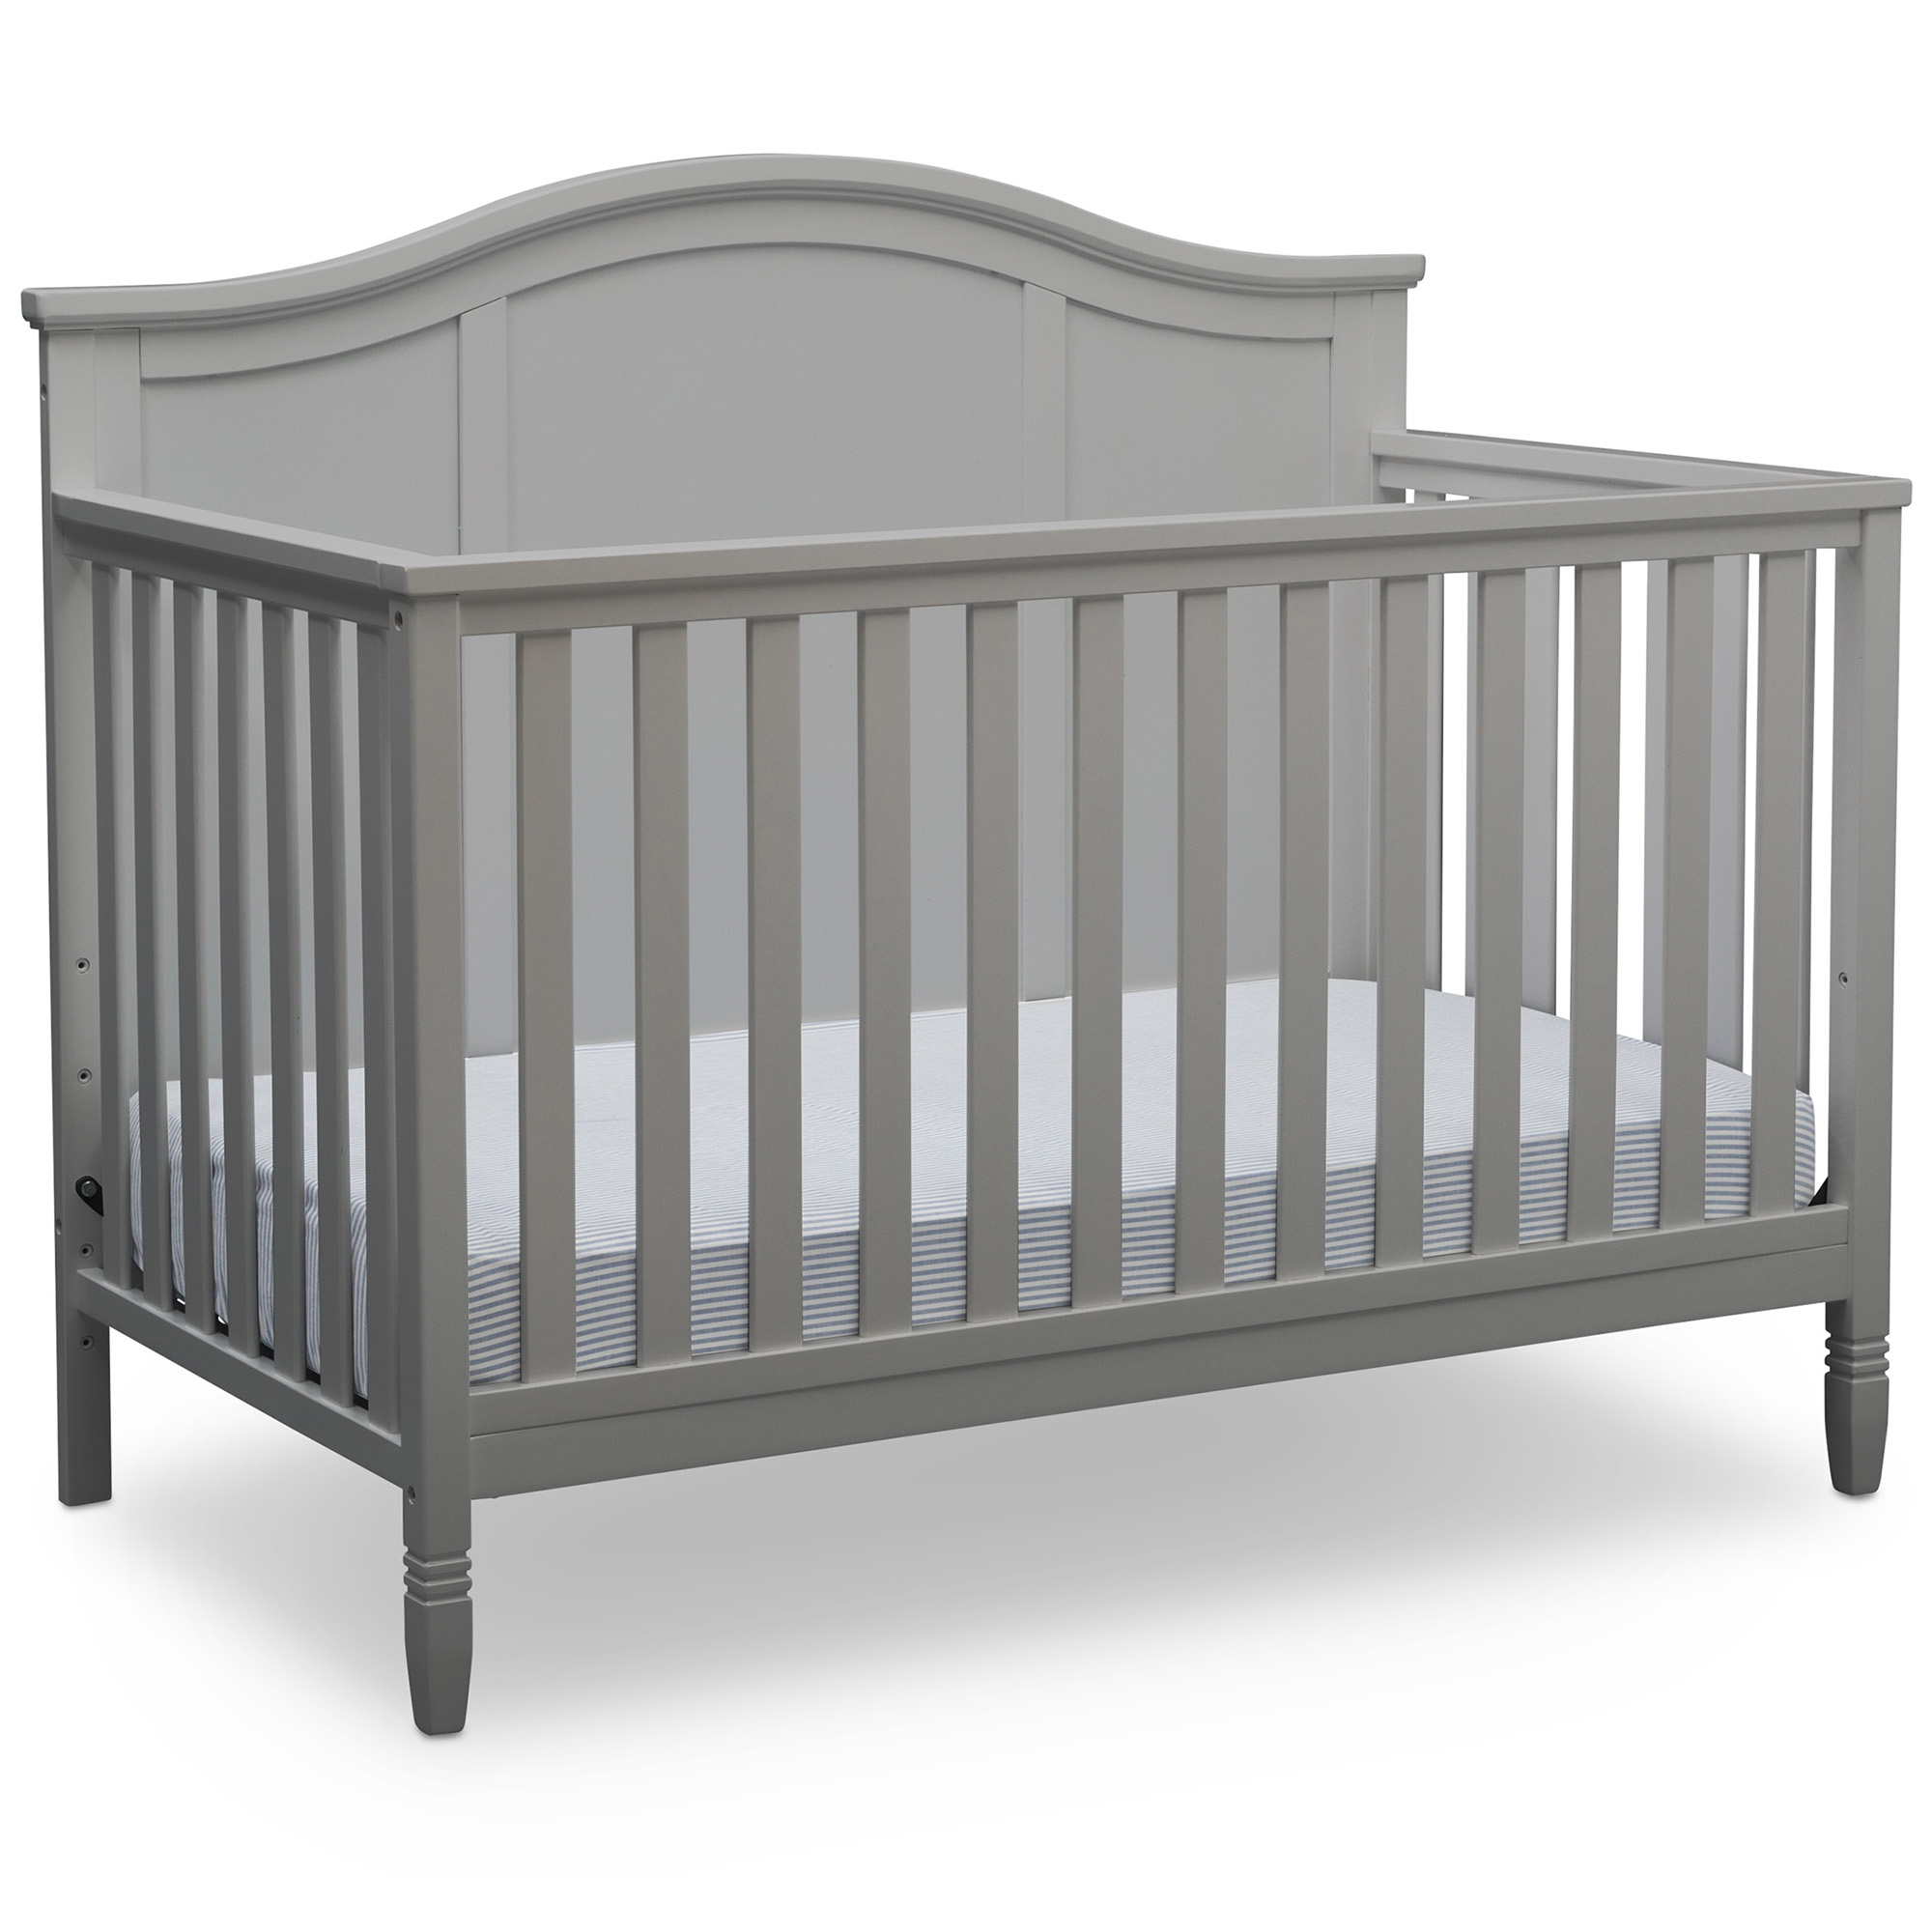 Delta Children Madrid 5-in-1 Convertible Baby Crib, Grey - image 1 of 13